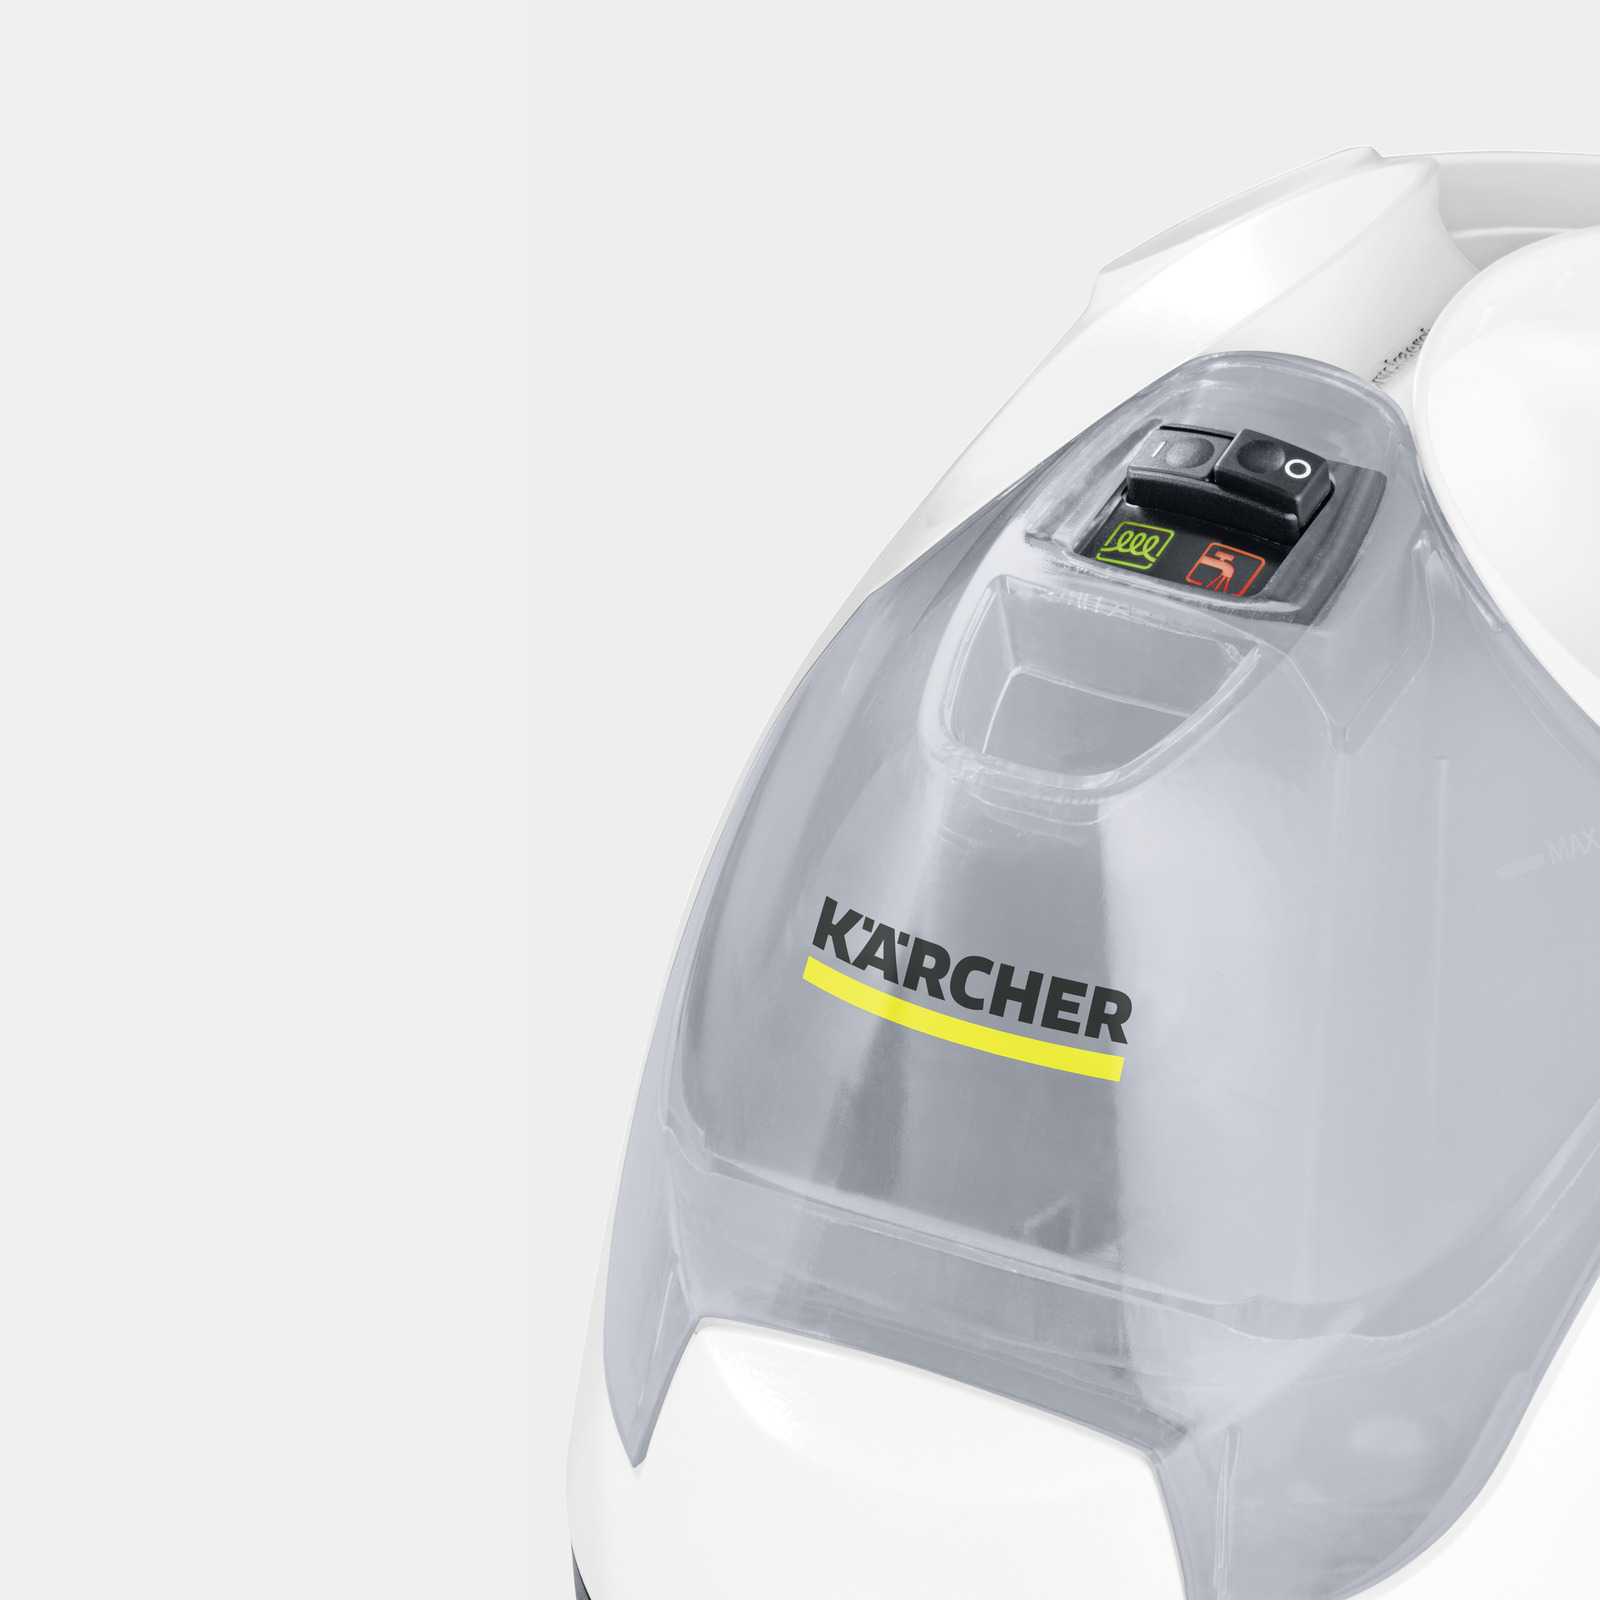 Karcher SC 4 EasyFix - Kelly Cleaning Equipment